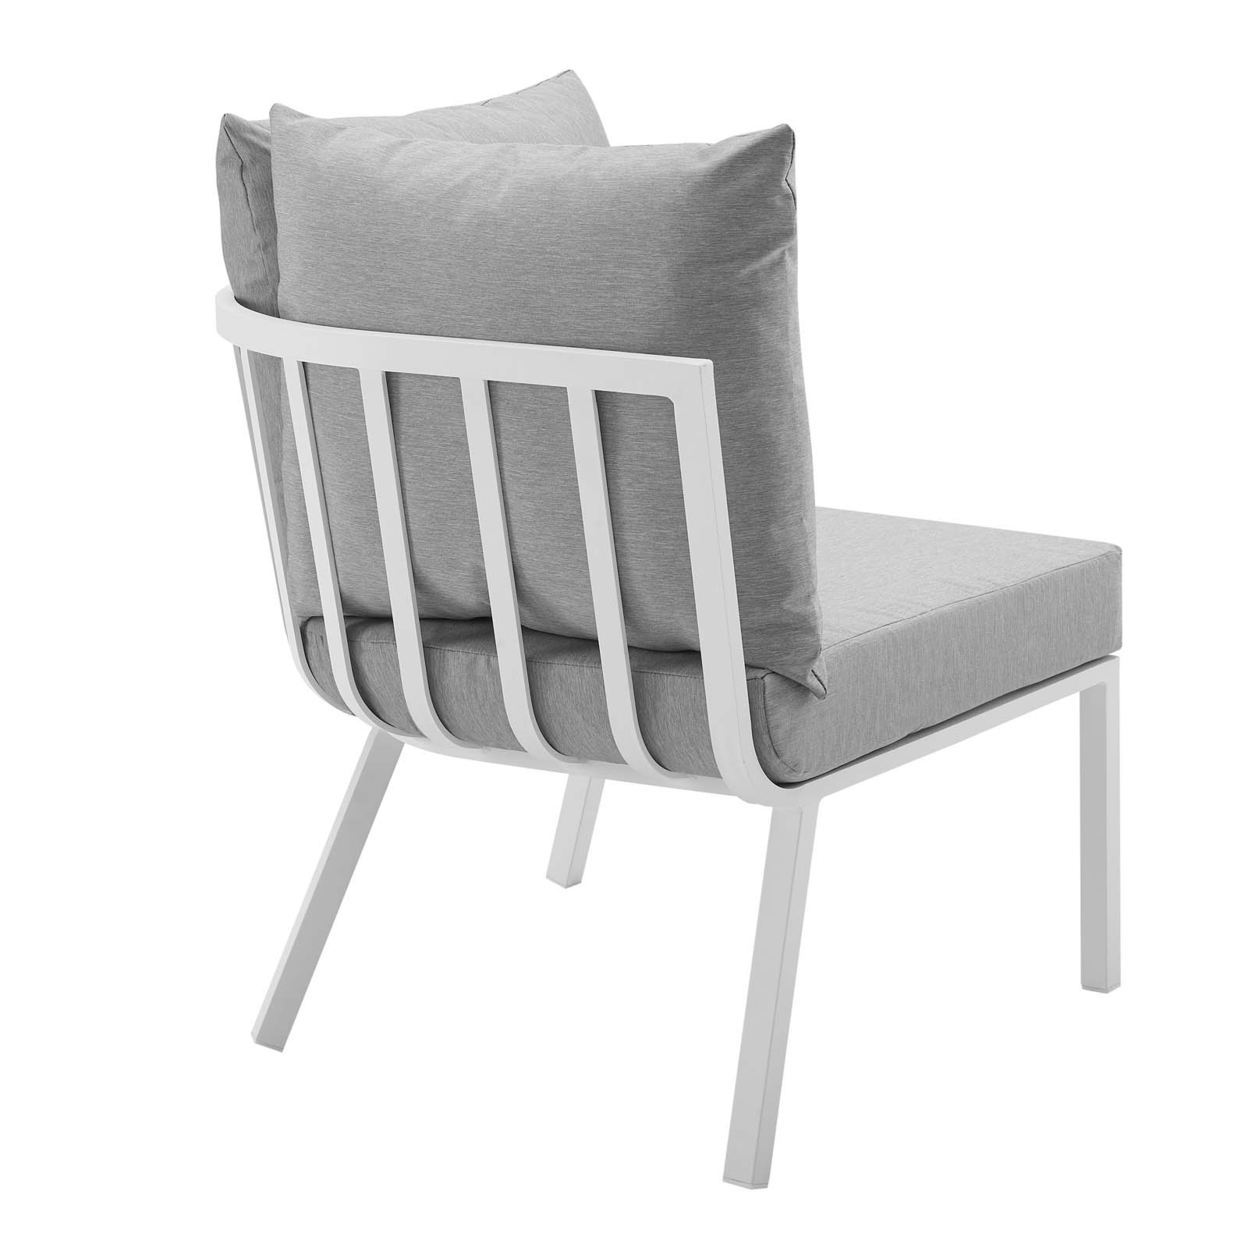 Riverside Outdoor Patio Aluminum Corner Chair,White Gray